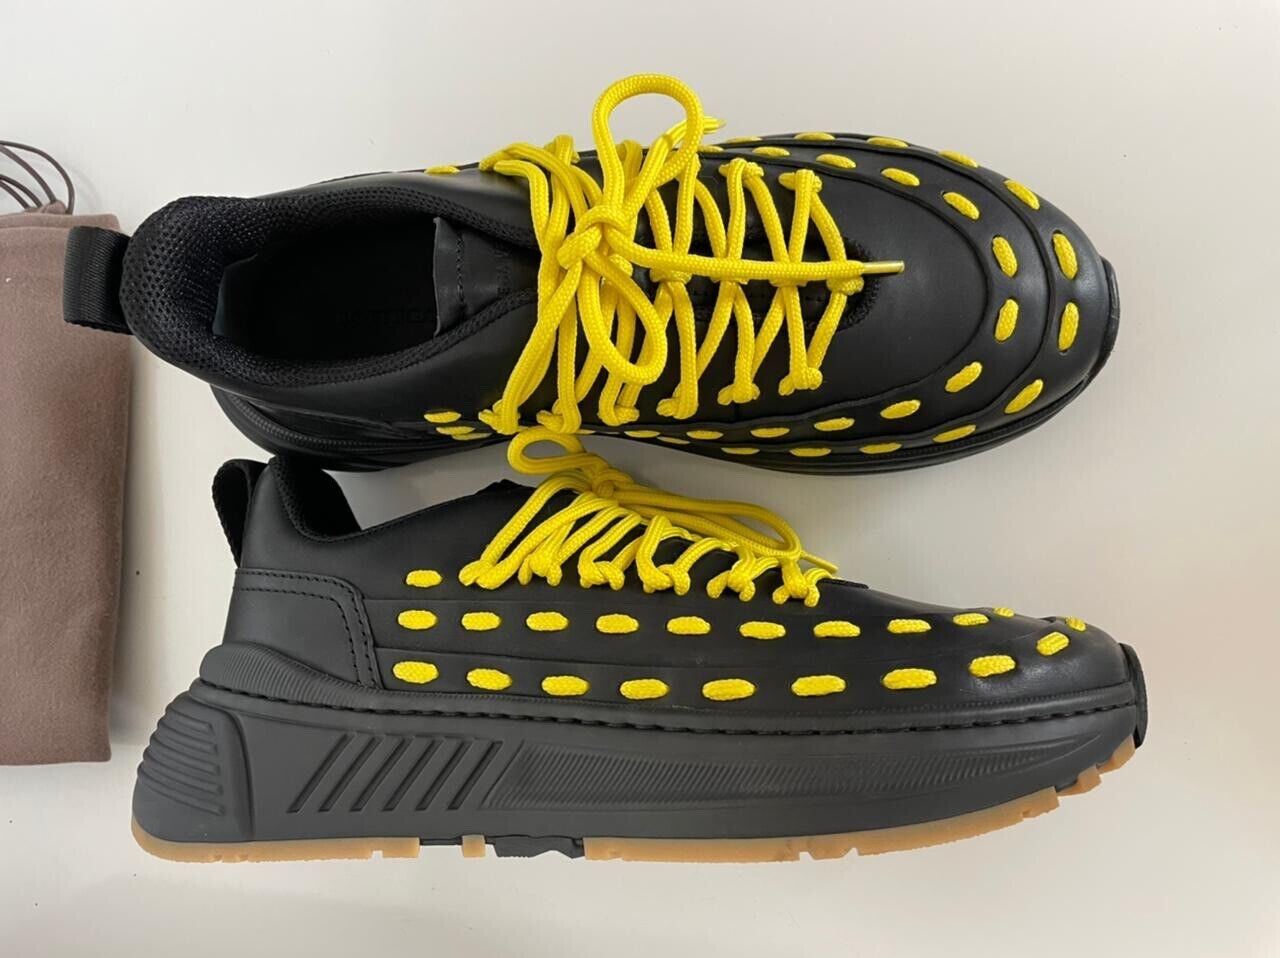 NIB $950 Bottega Veneta Mens Leather Black/Yellow Sneakers 9.5 US (42.5) 578305